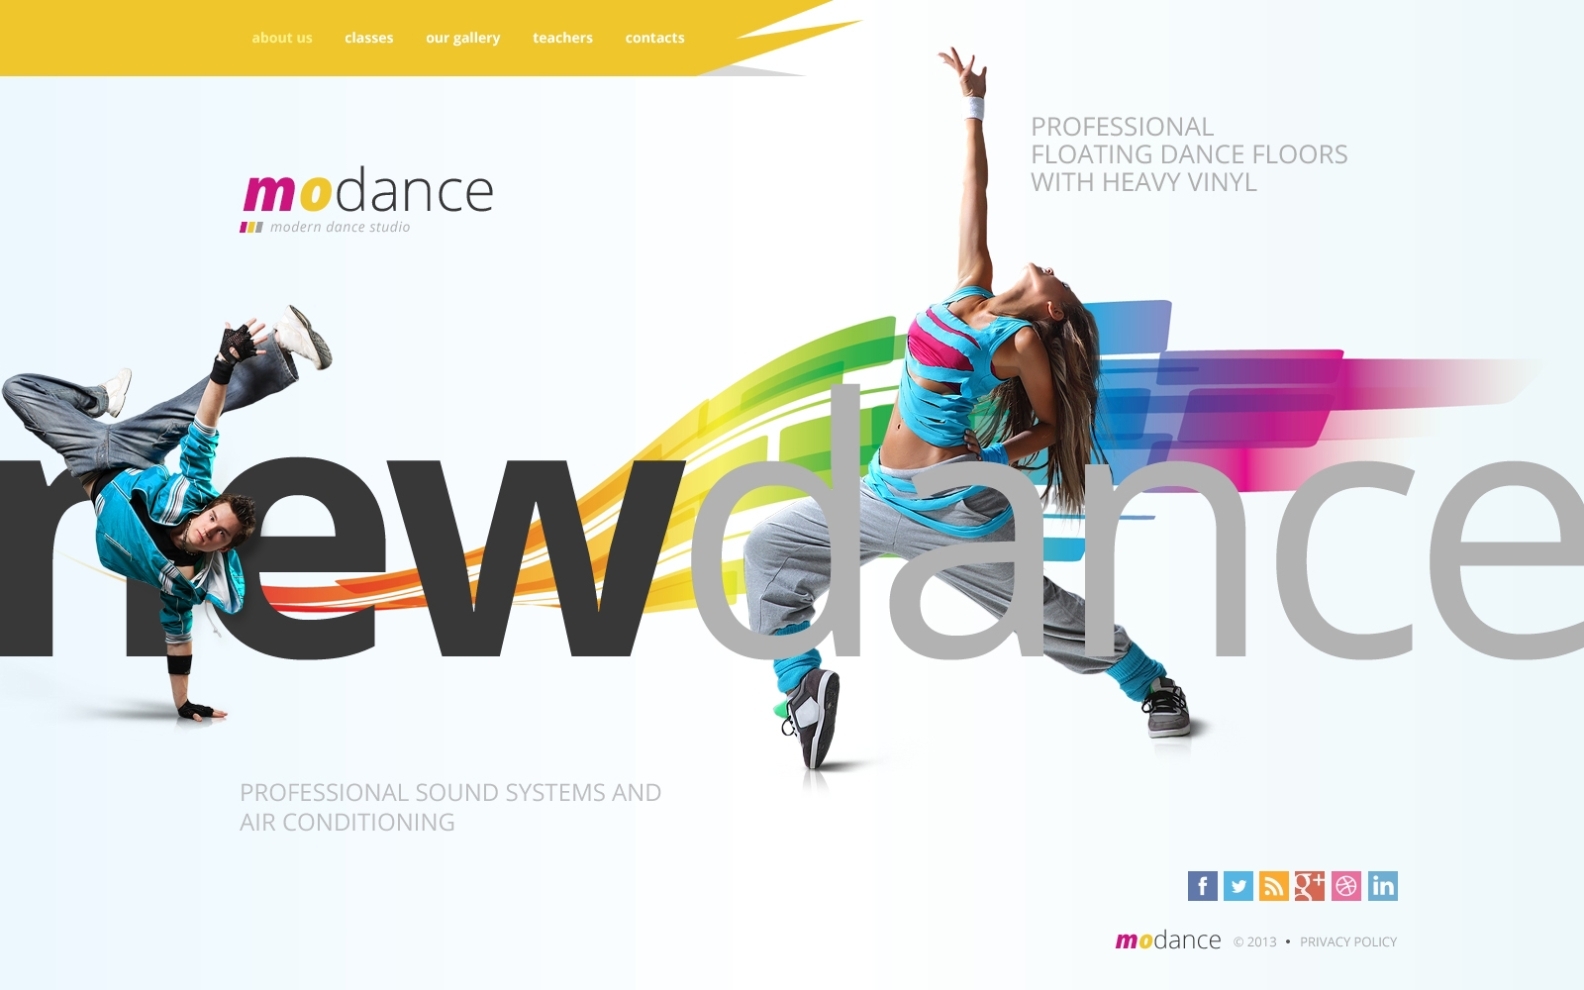 Dance Studio Website Template #45859 Intended For Free Dance Studio Business Plan Template